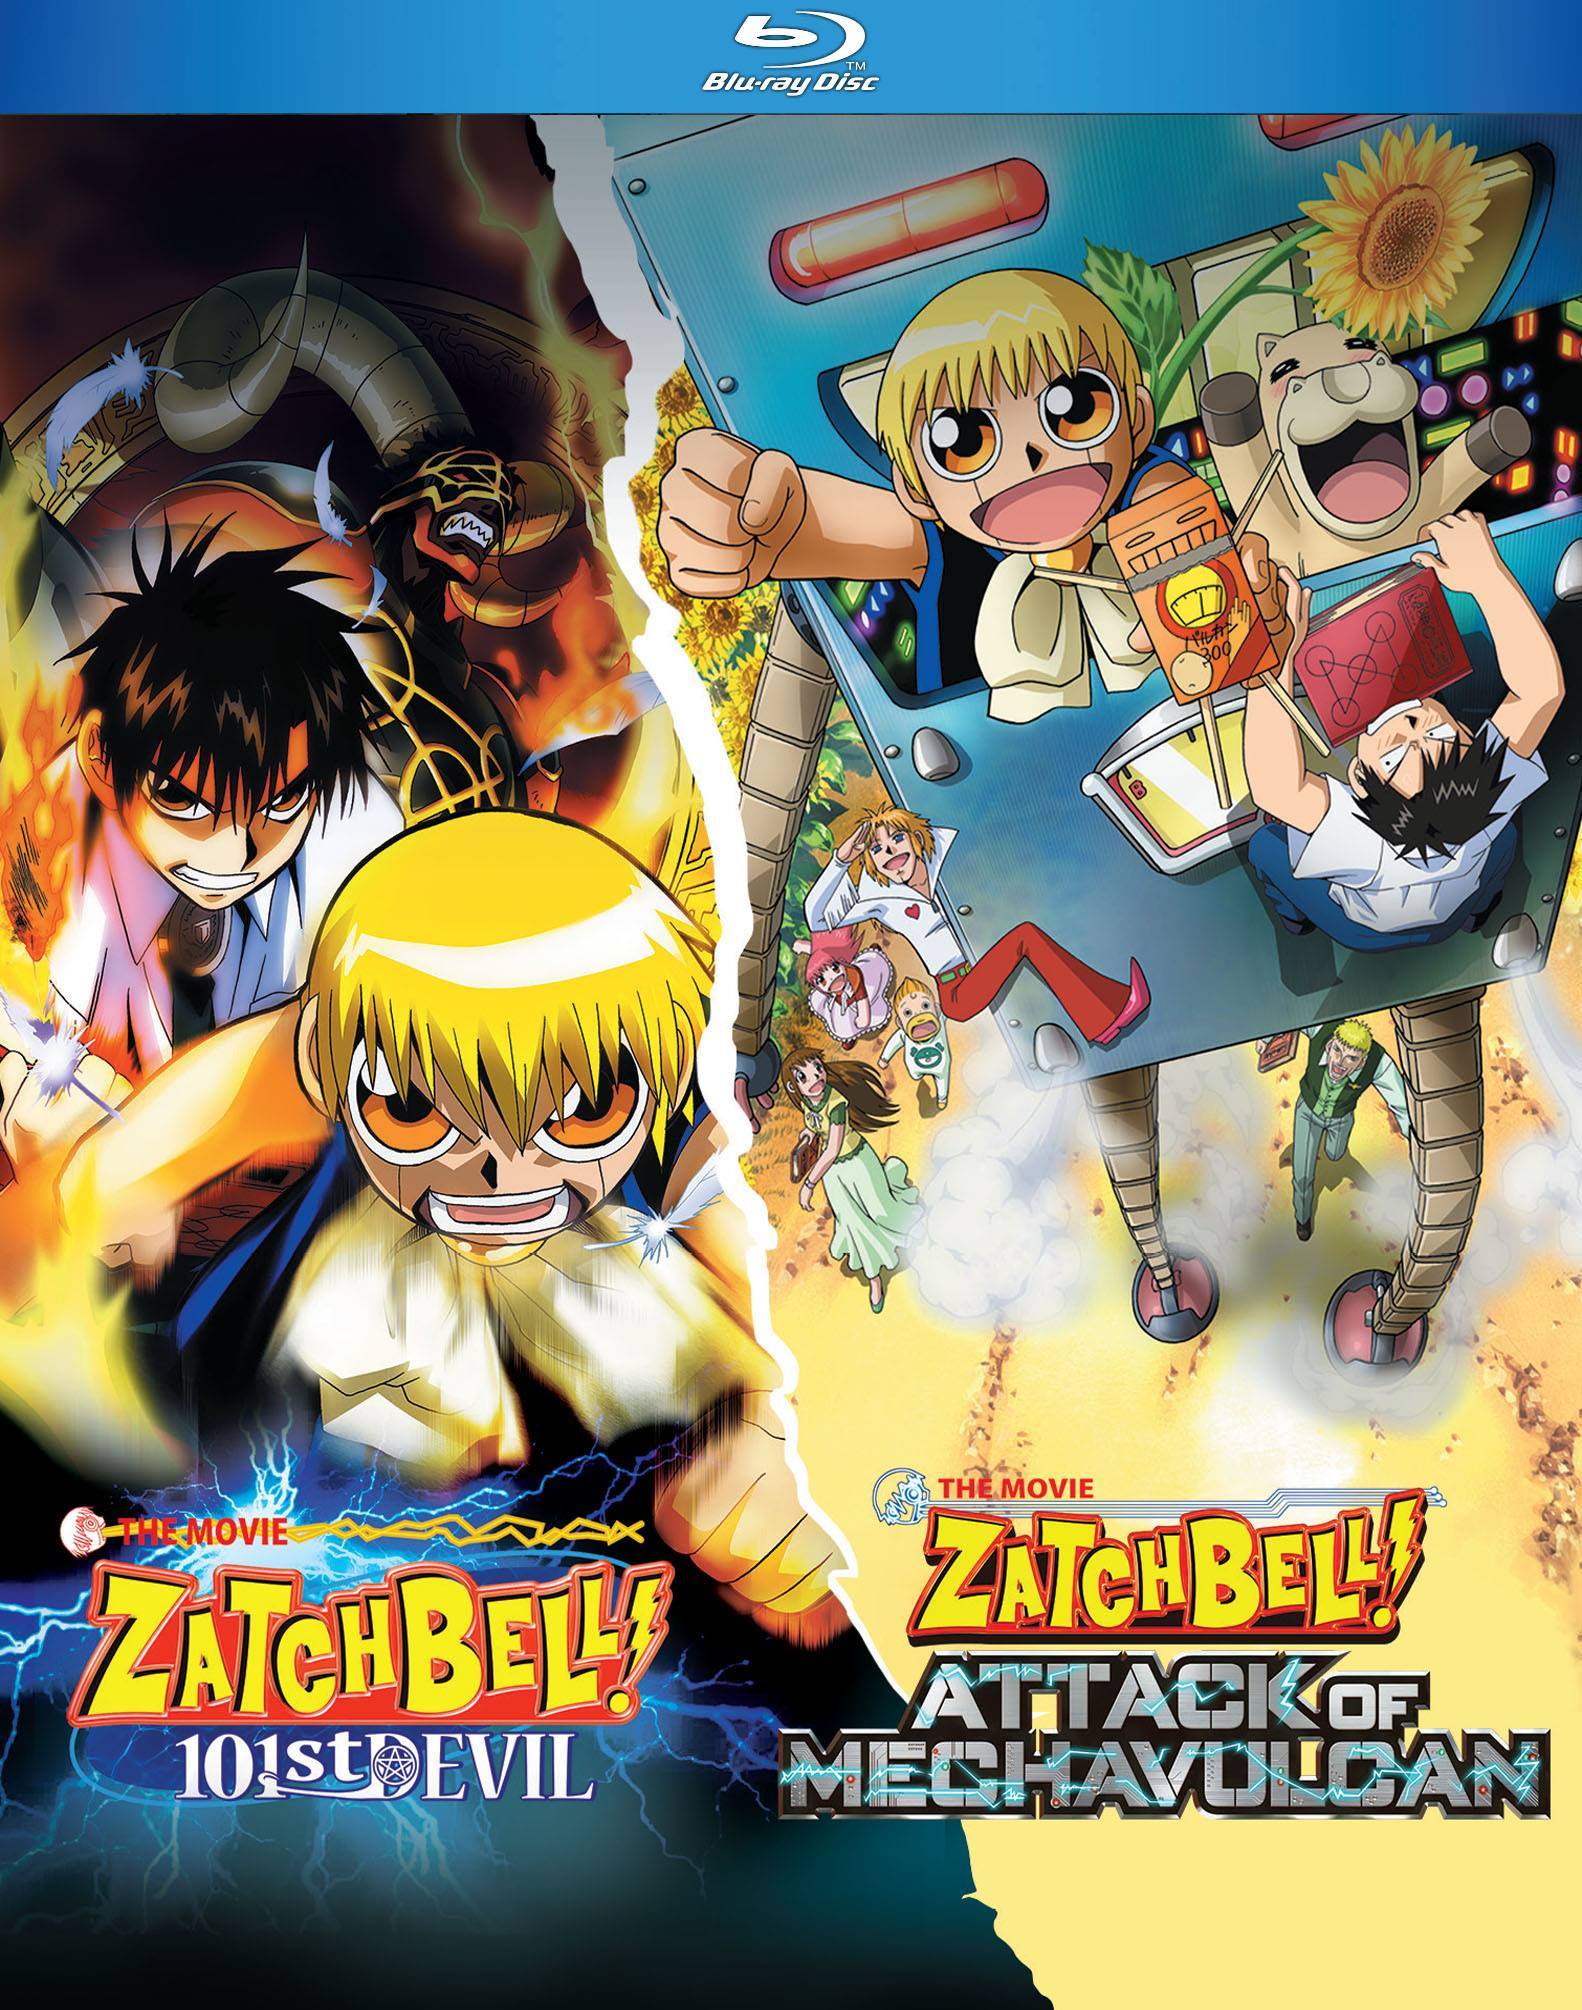 Best Buy: Zatch Bell!, Vol. 1: The Lightning Boy From Another World [DVD]